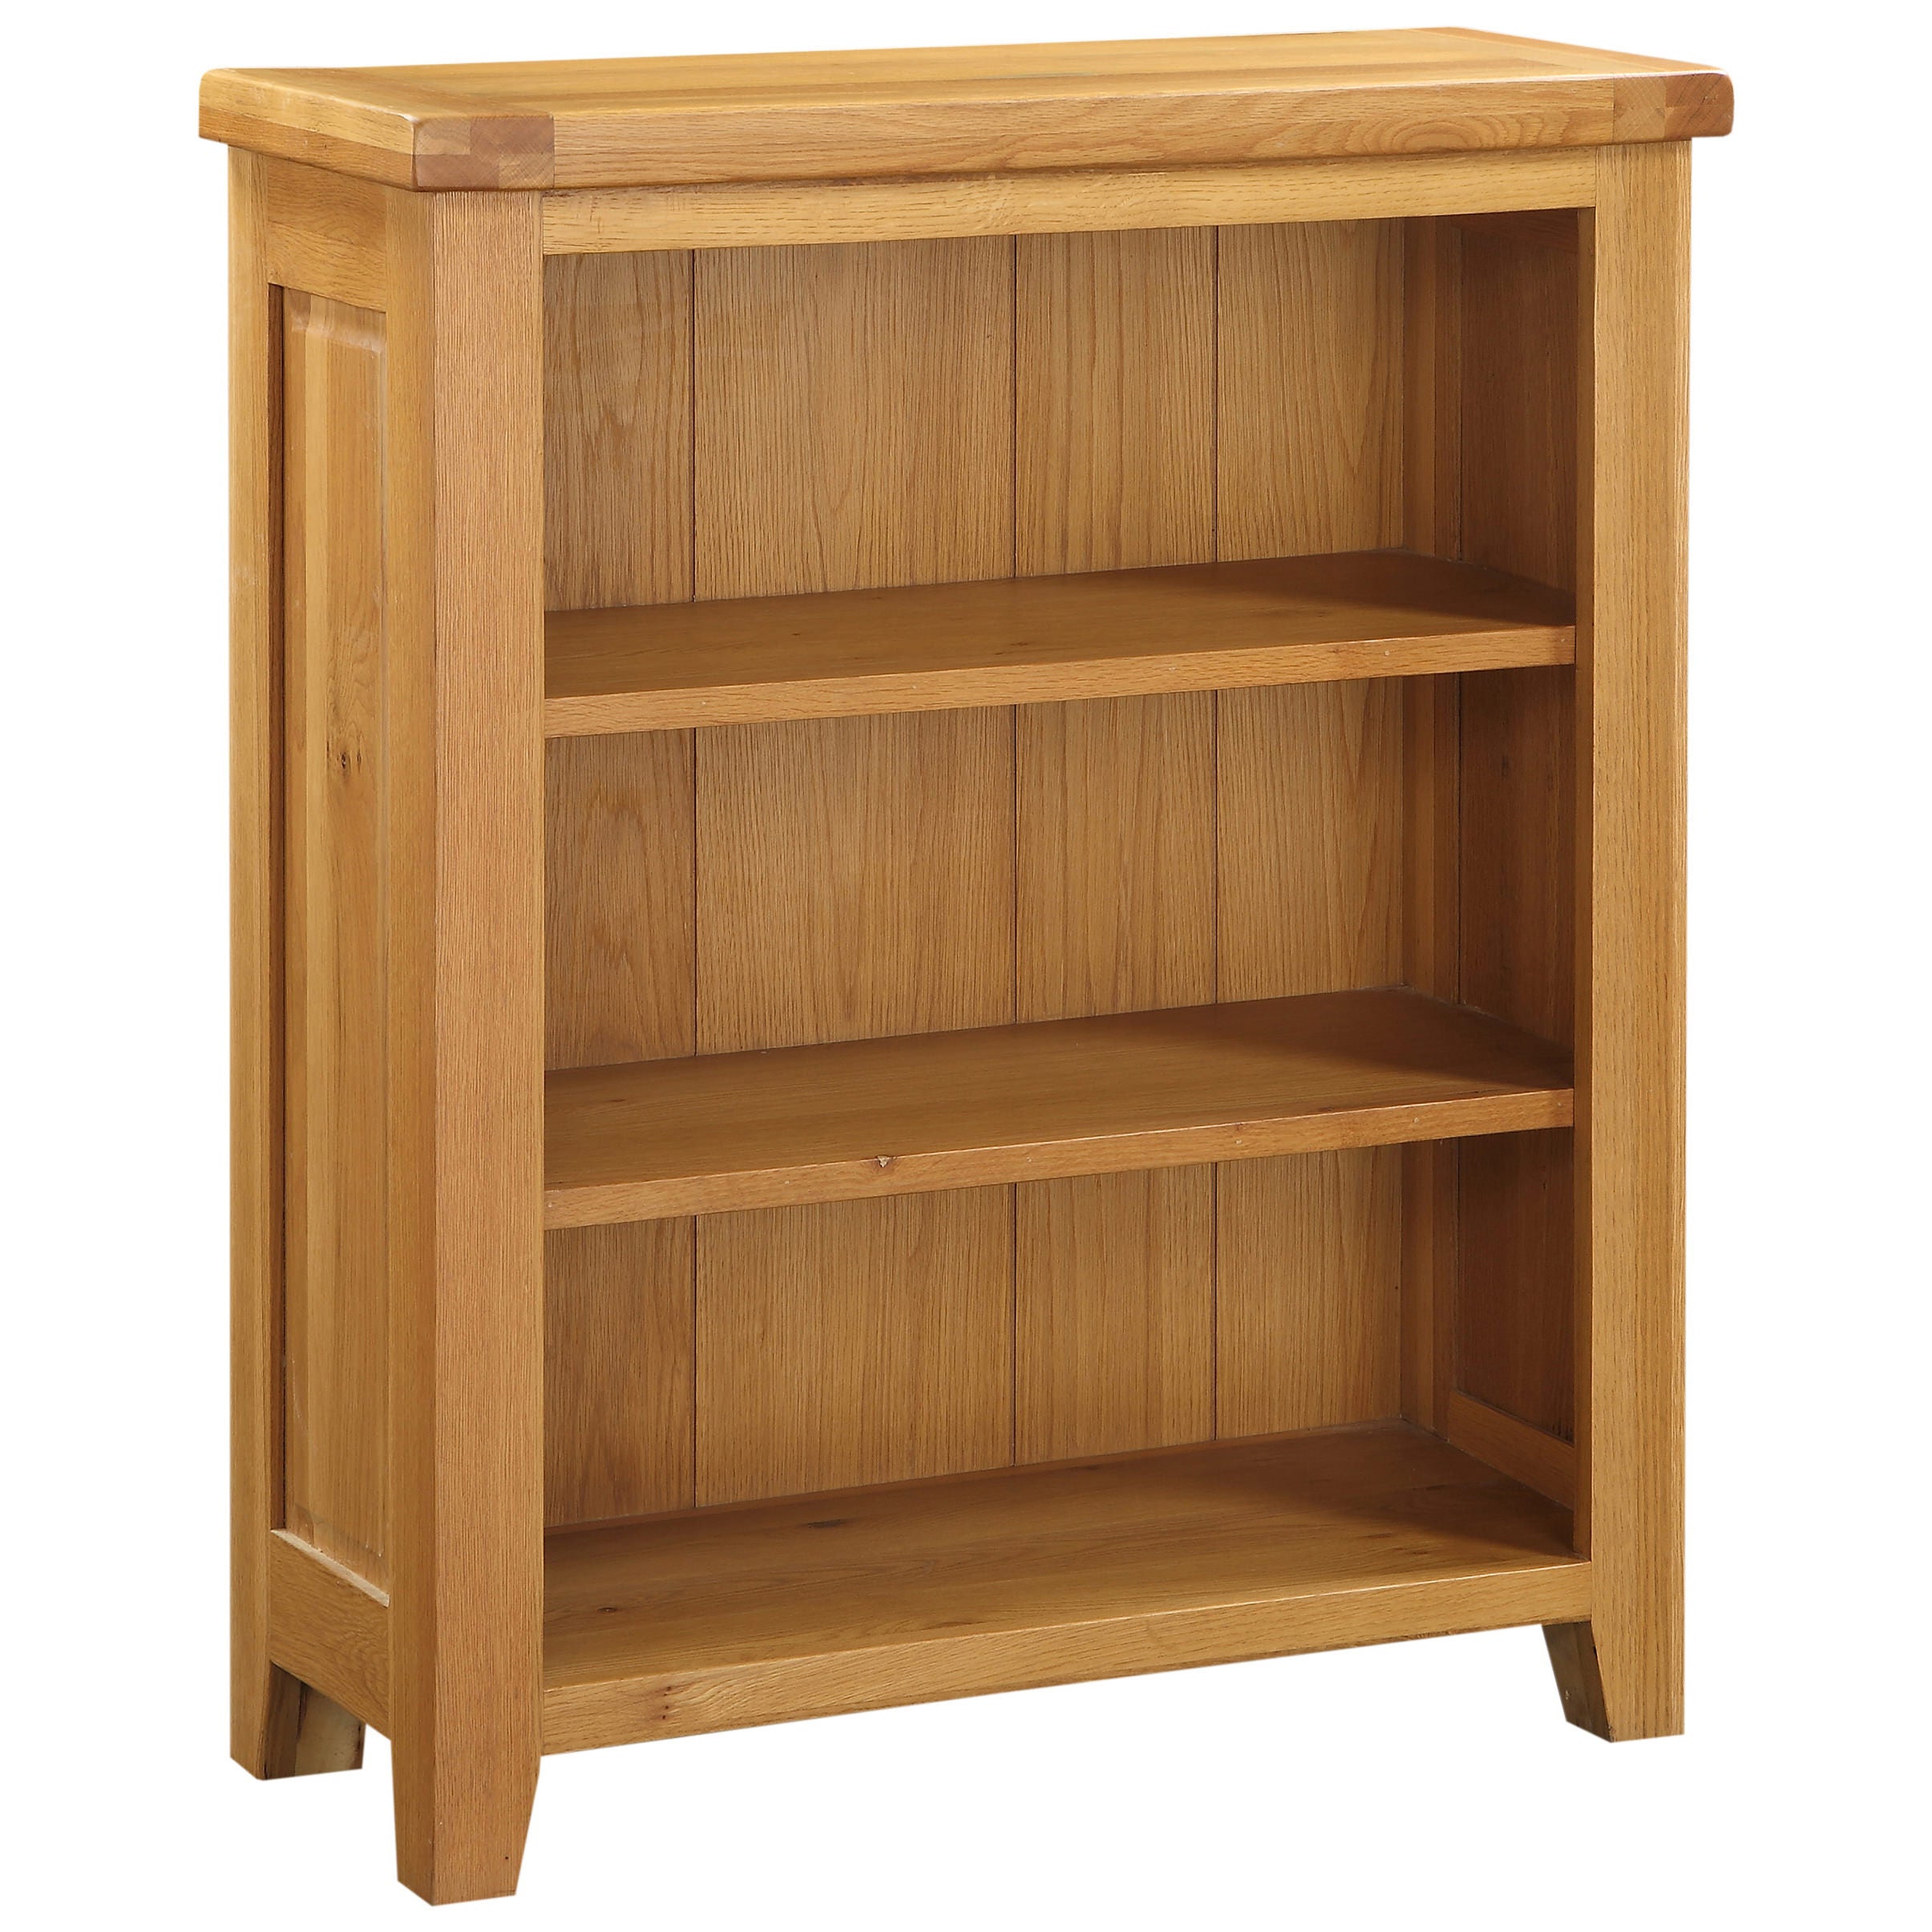 Solid Oak Bookcase Bookshelf Book Storage 2 Shelf Shelving Unit